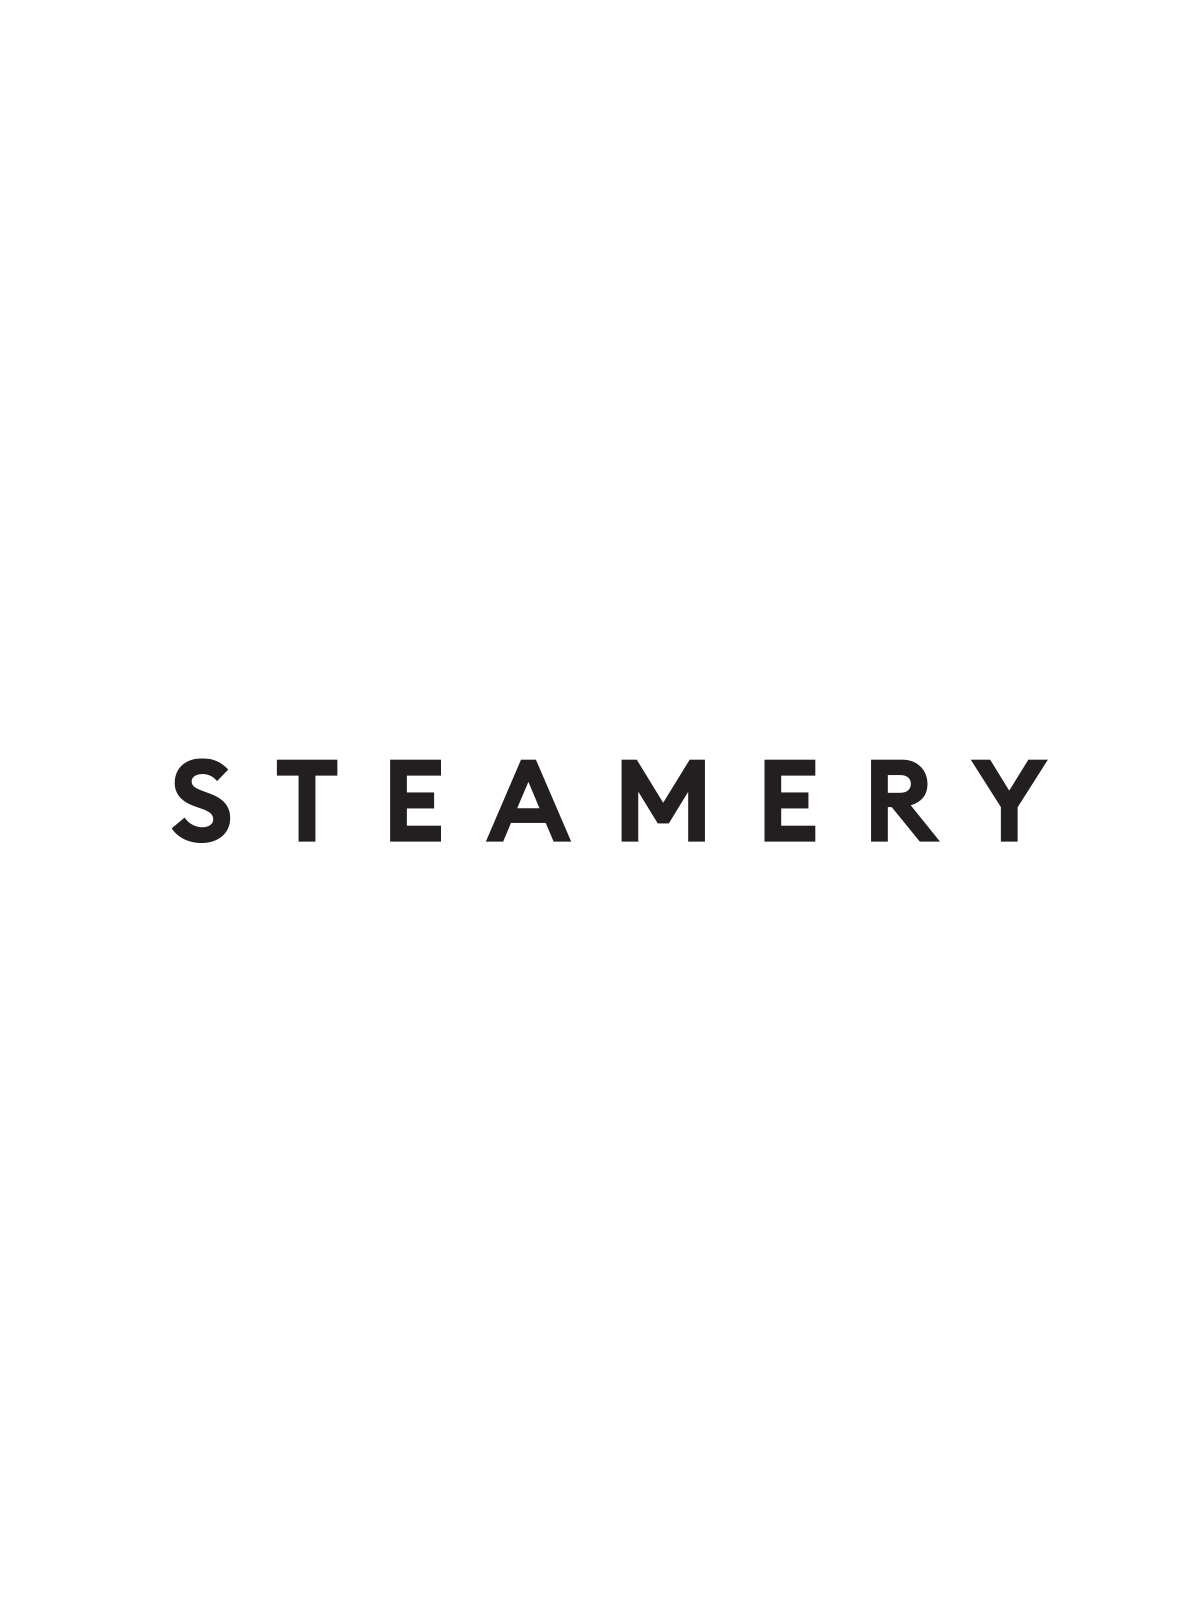 steamery